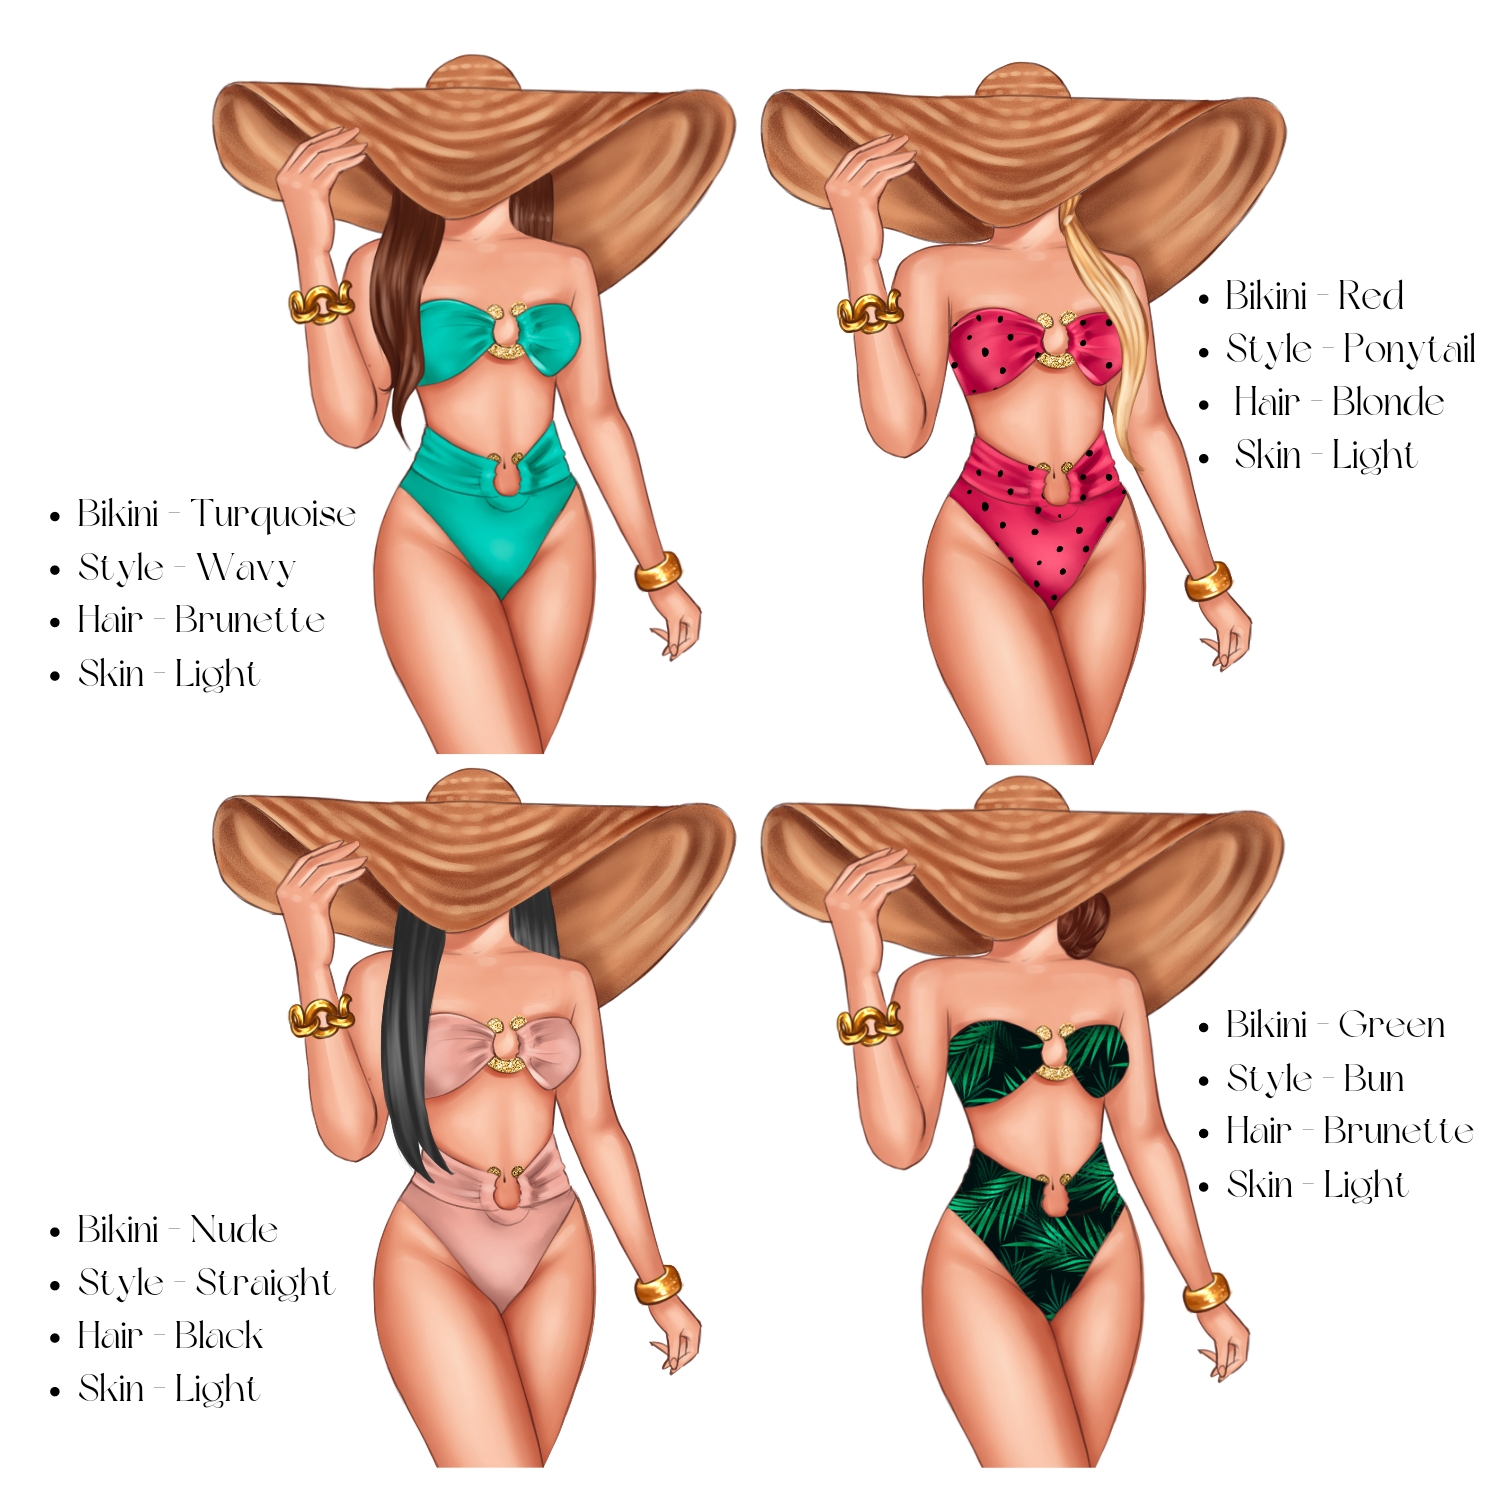 Bikini sticker options 1